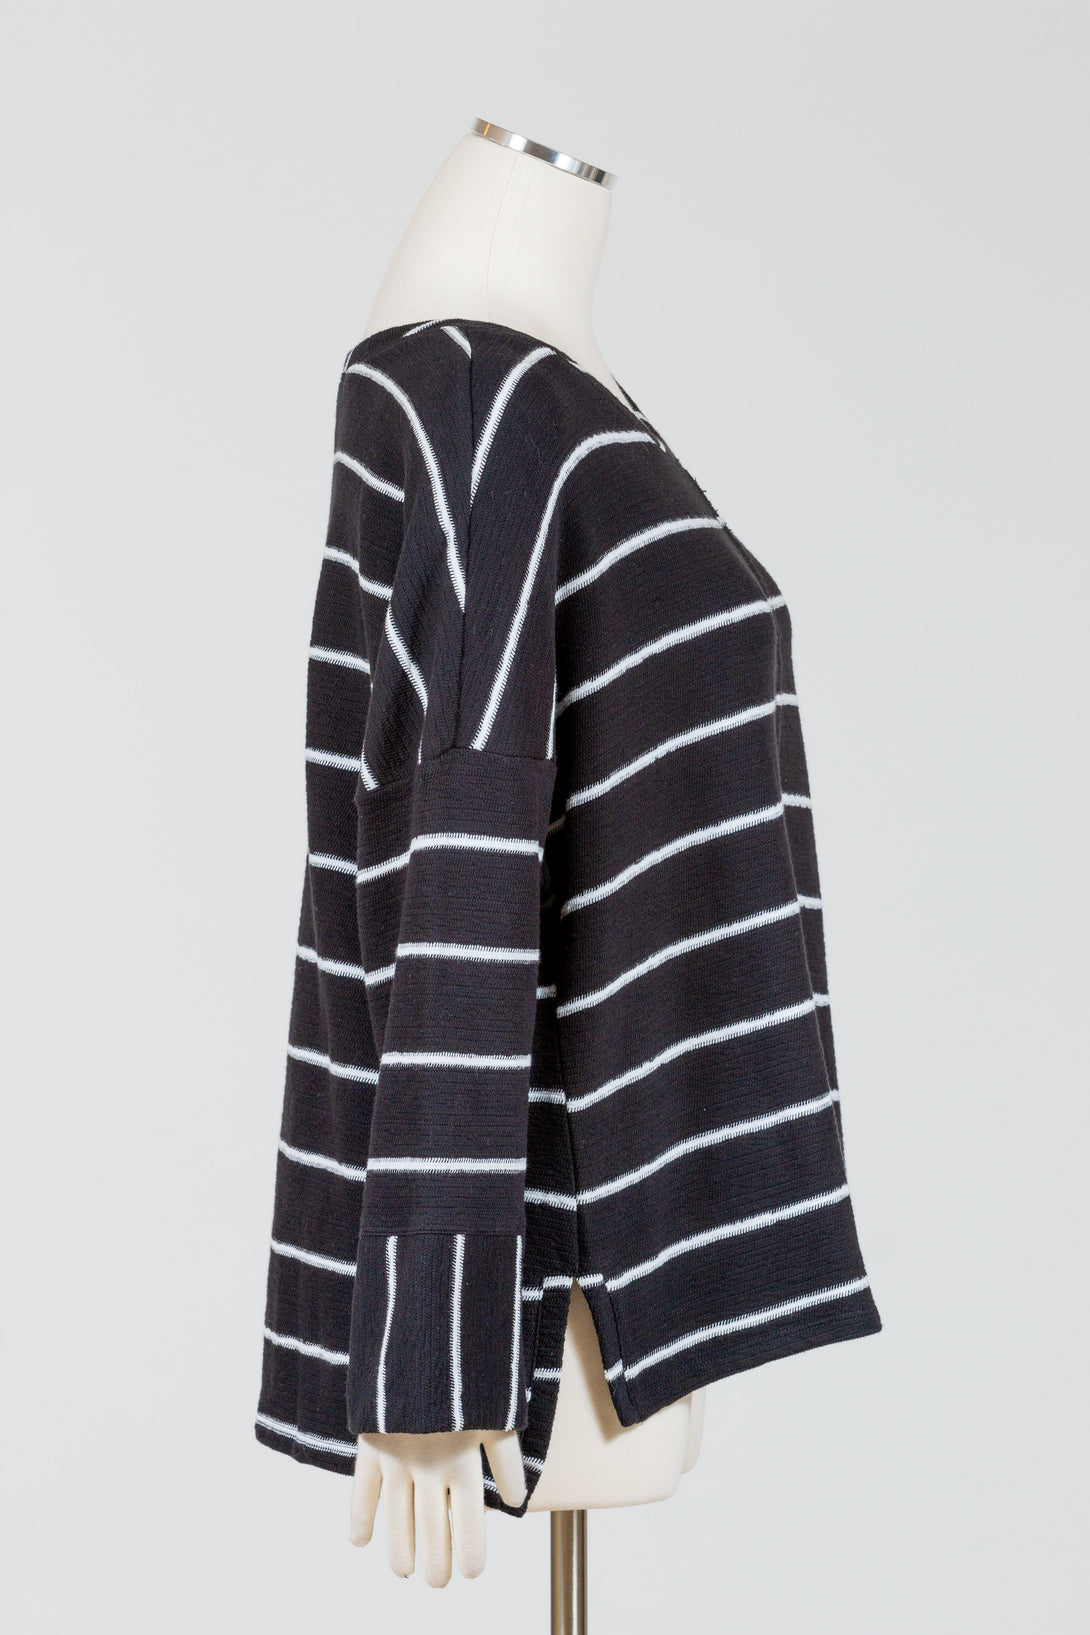 Habitat-Striped-Boxy-Sweater-FrenchTerry-Black-White-Stripe